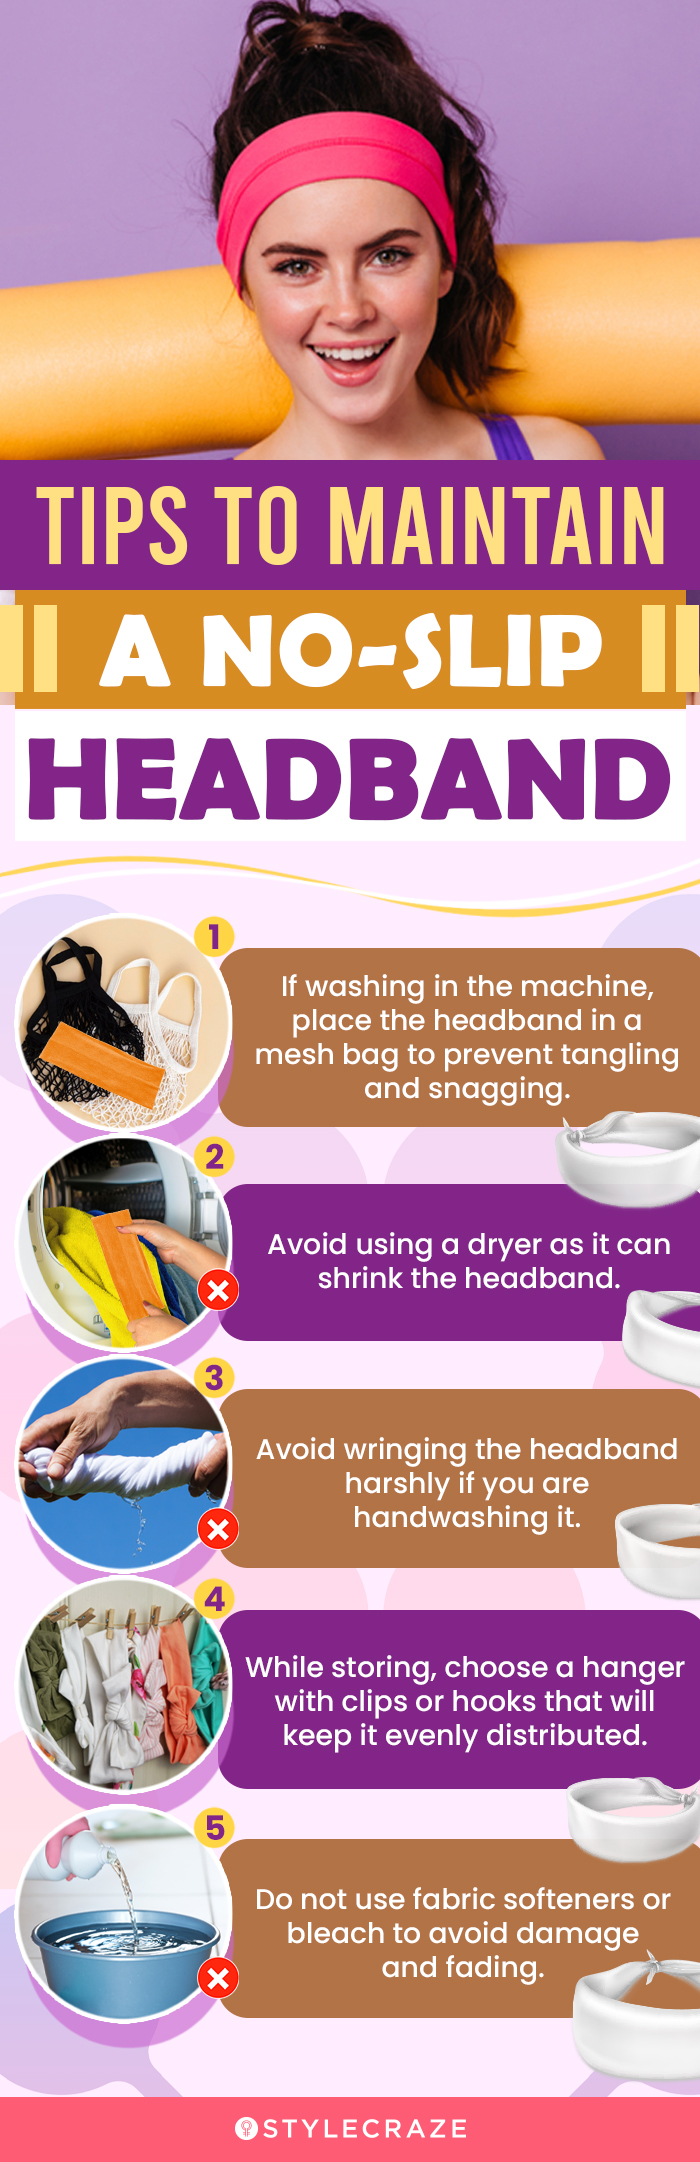 Tips To Maintain A No-Slip Headband (infographic)